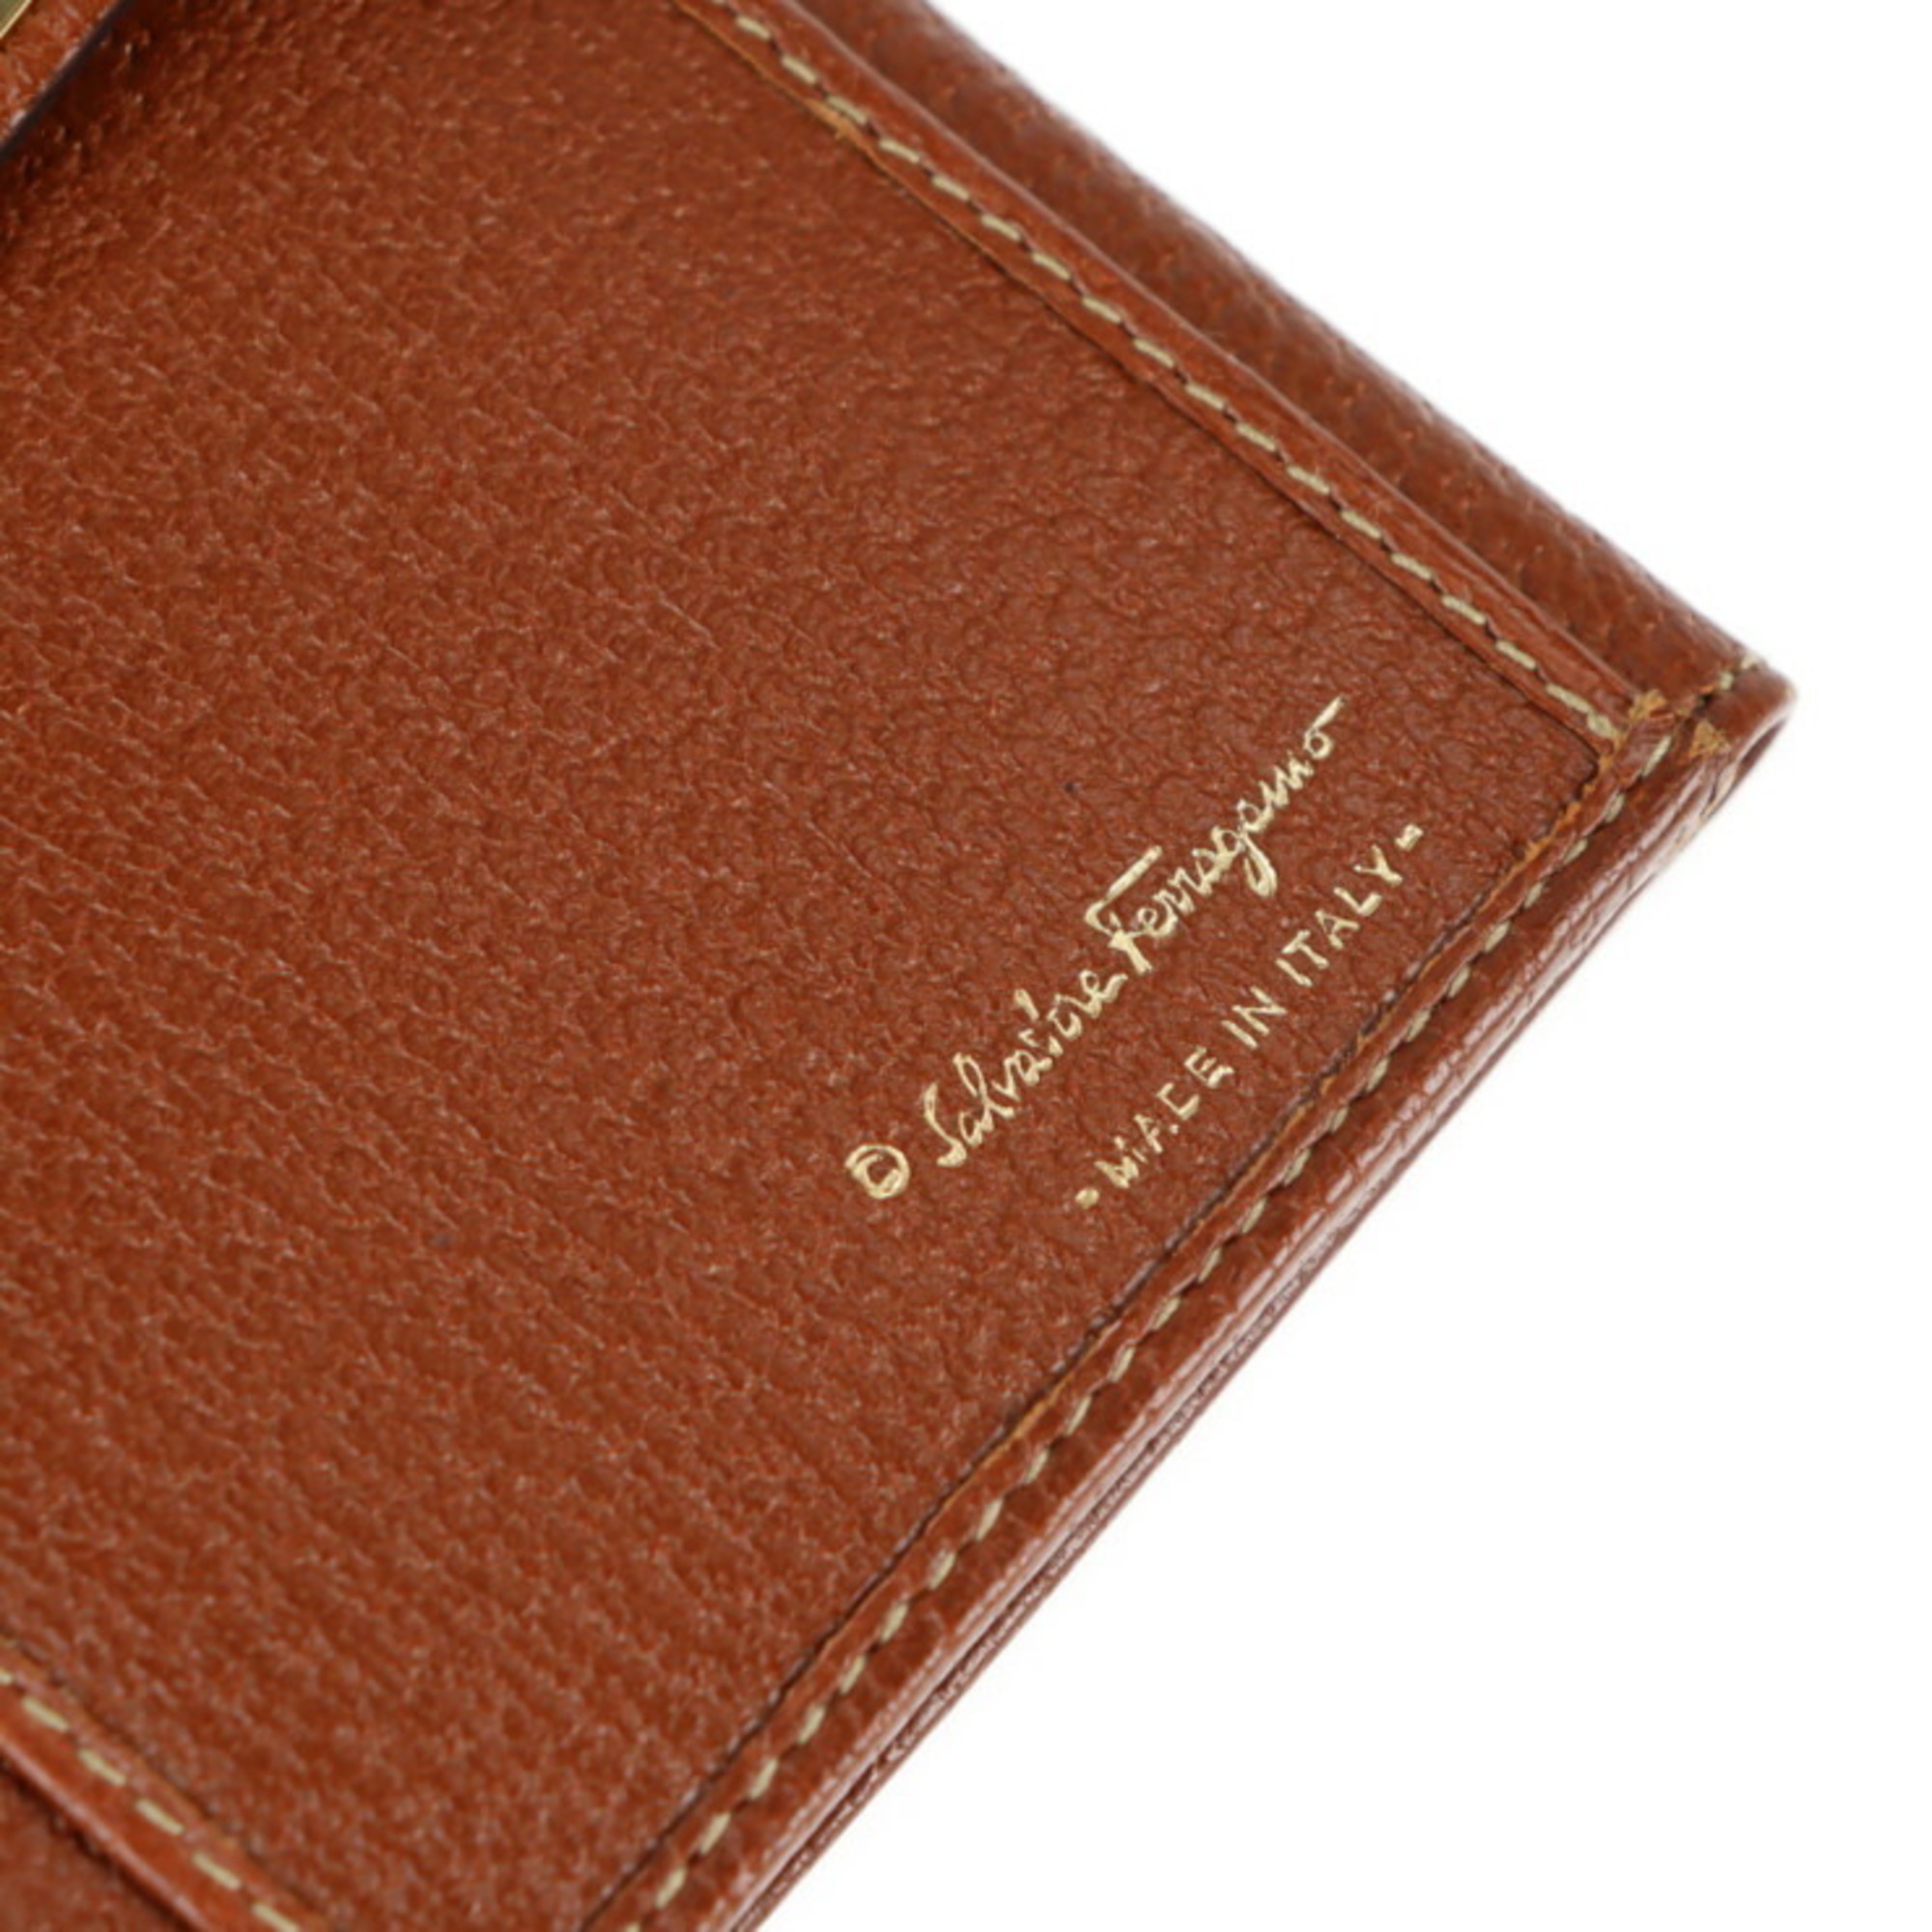 Salvatore Ferragamo Gancini bi-fold wallet 22 1835 leather brown gold hardware